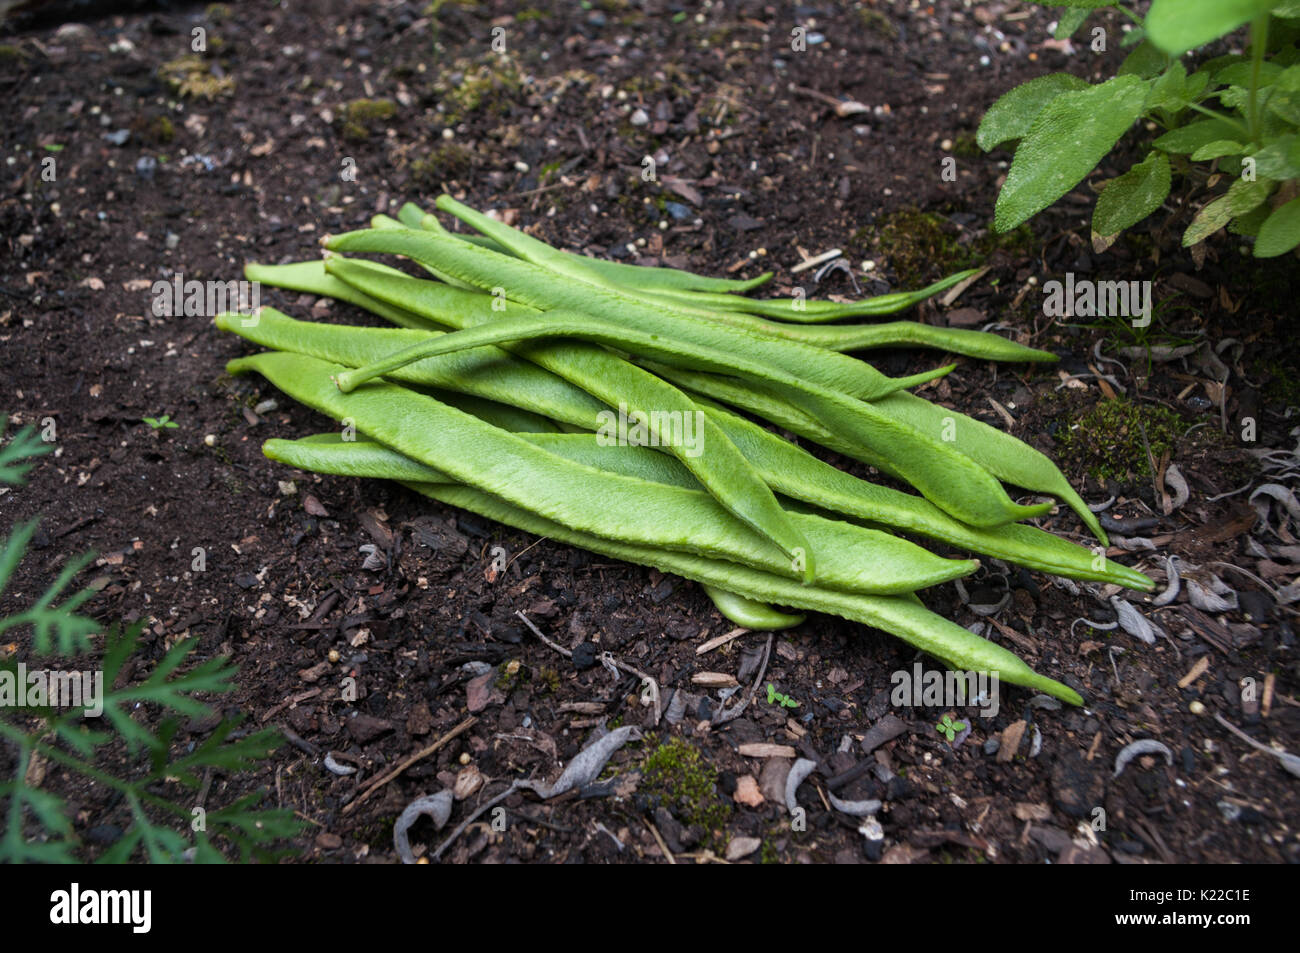 Freshly picked Scarlet Emperor runner beans on garden soil outdoors. Diagonal composition. Stock Photo